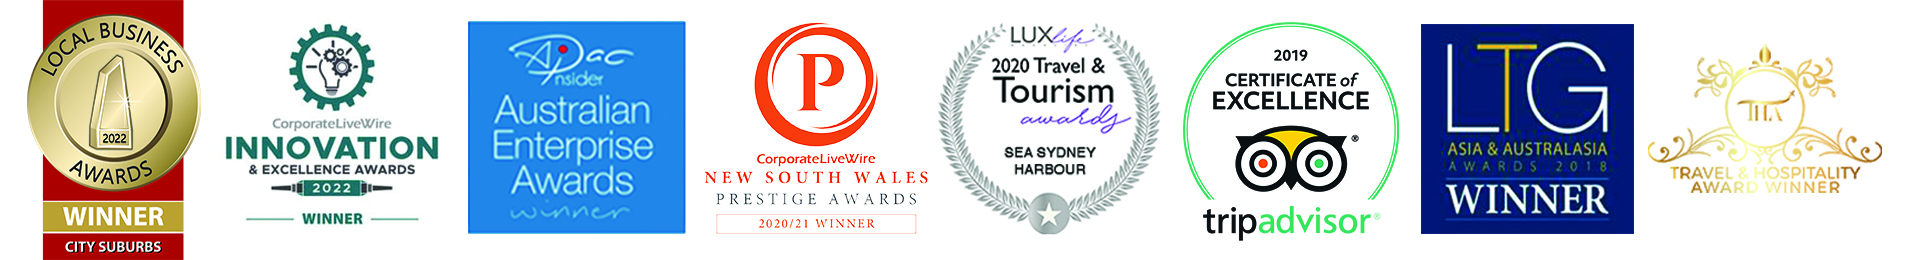 Sea Sydney Harbour Awards